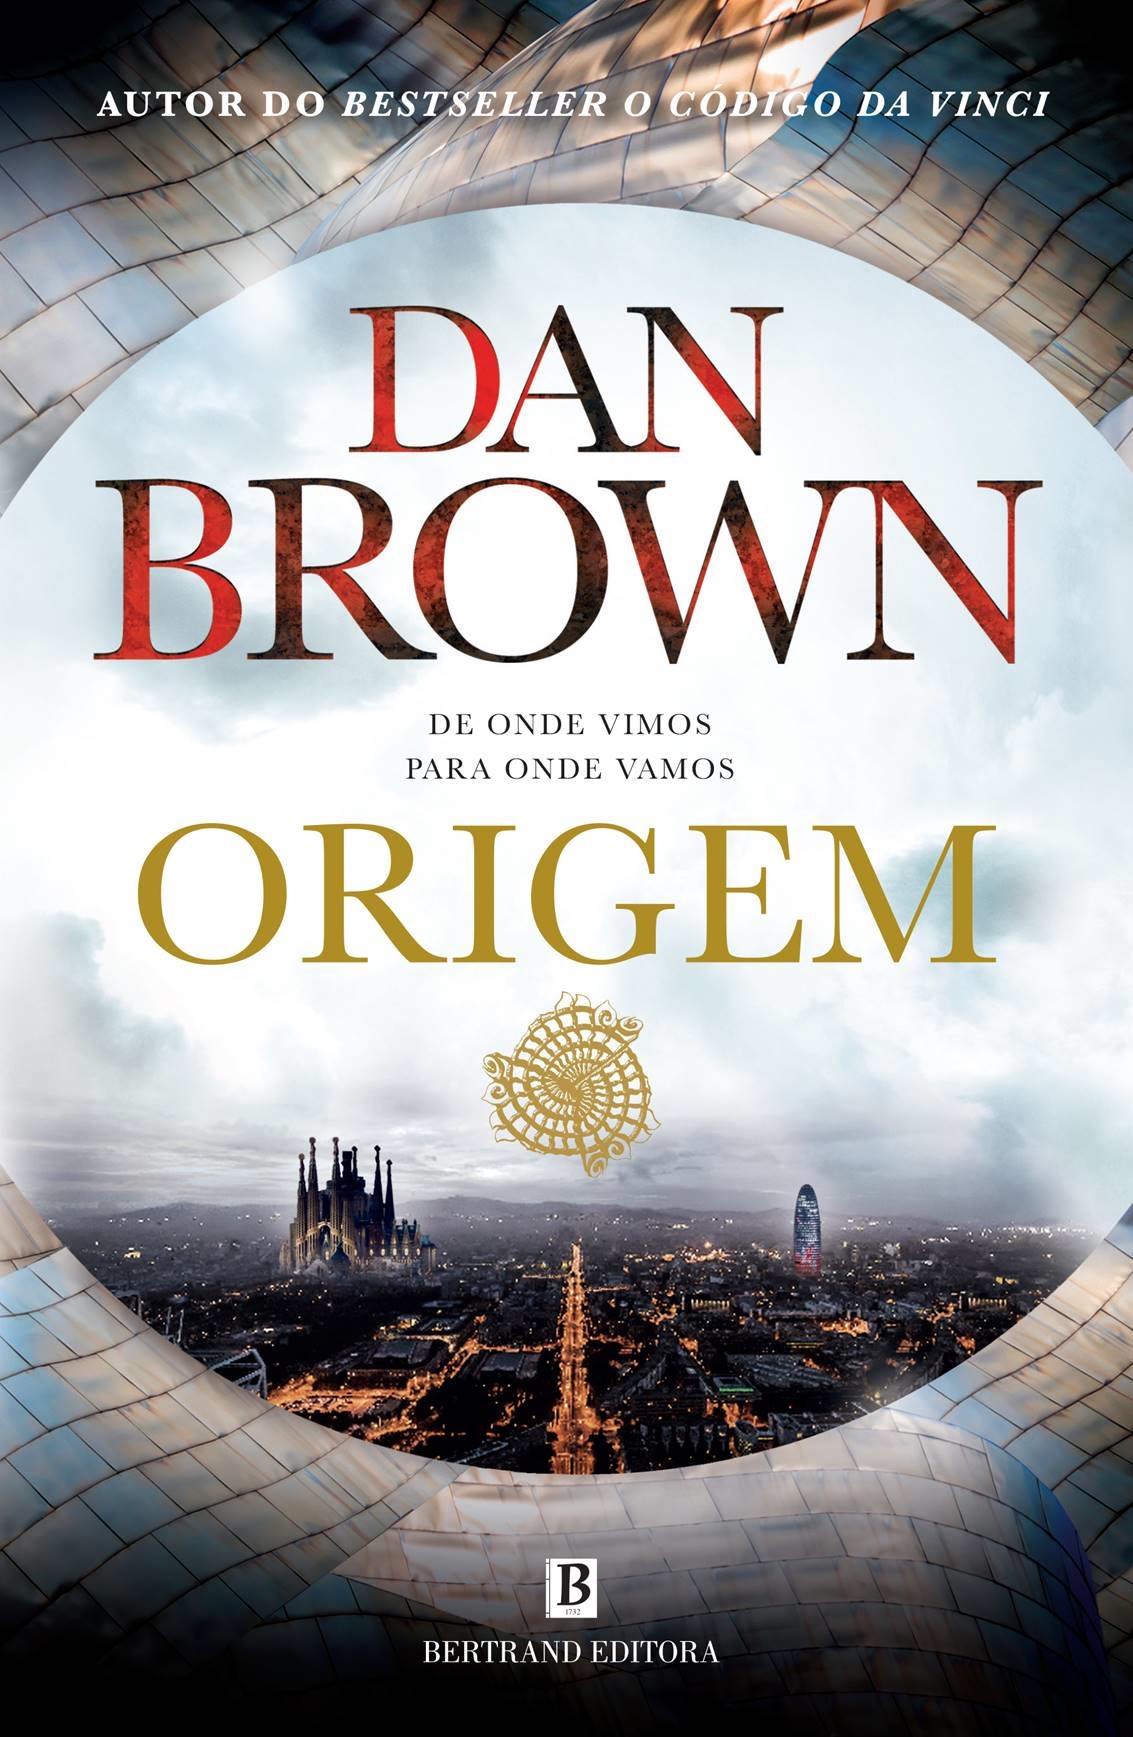 Originbook cover